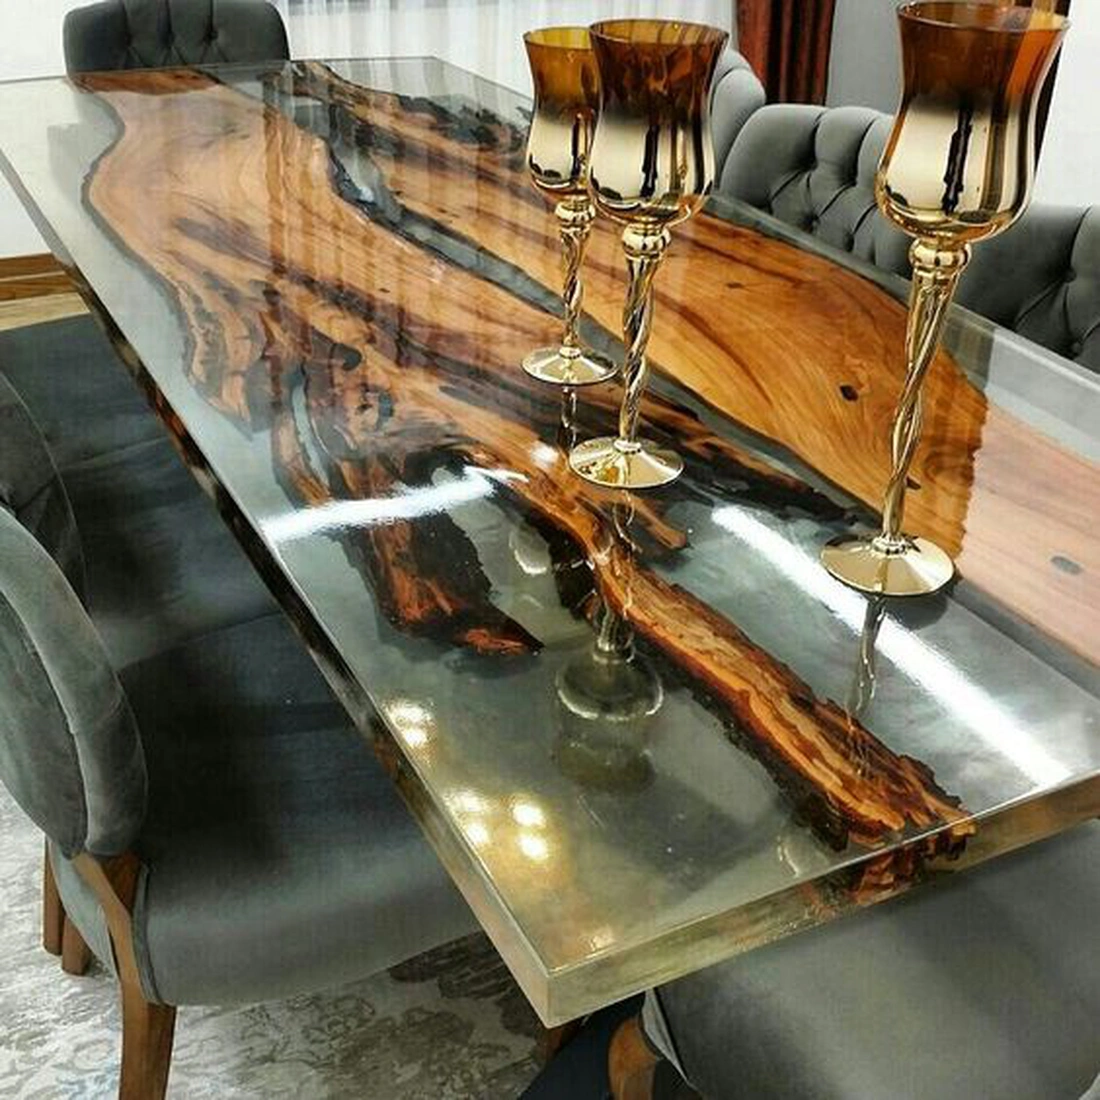 Wood furniture